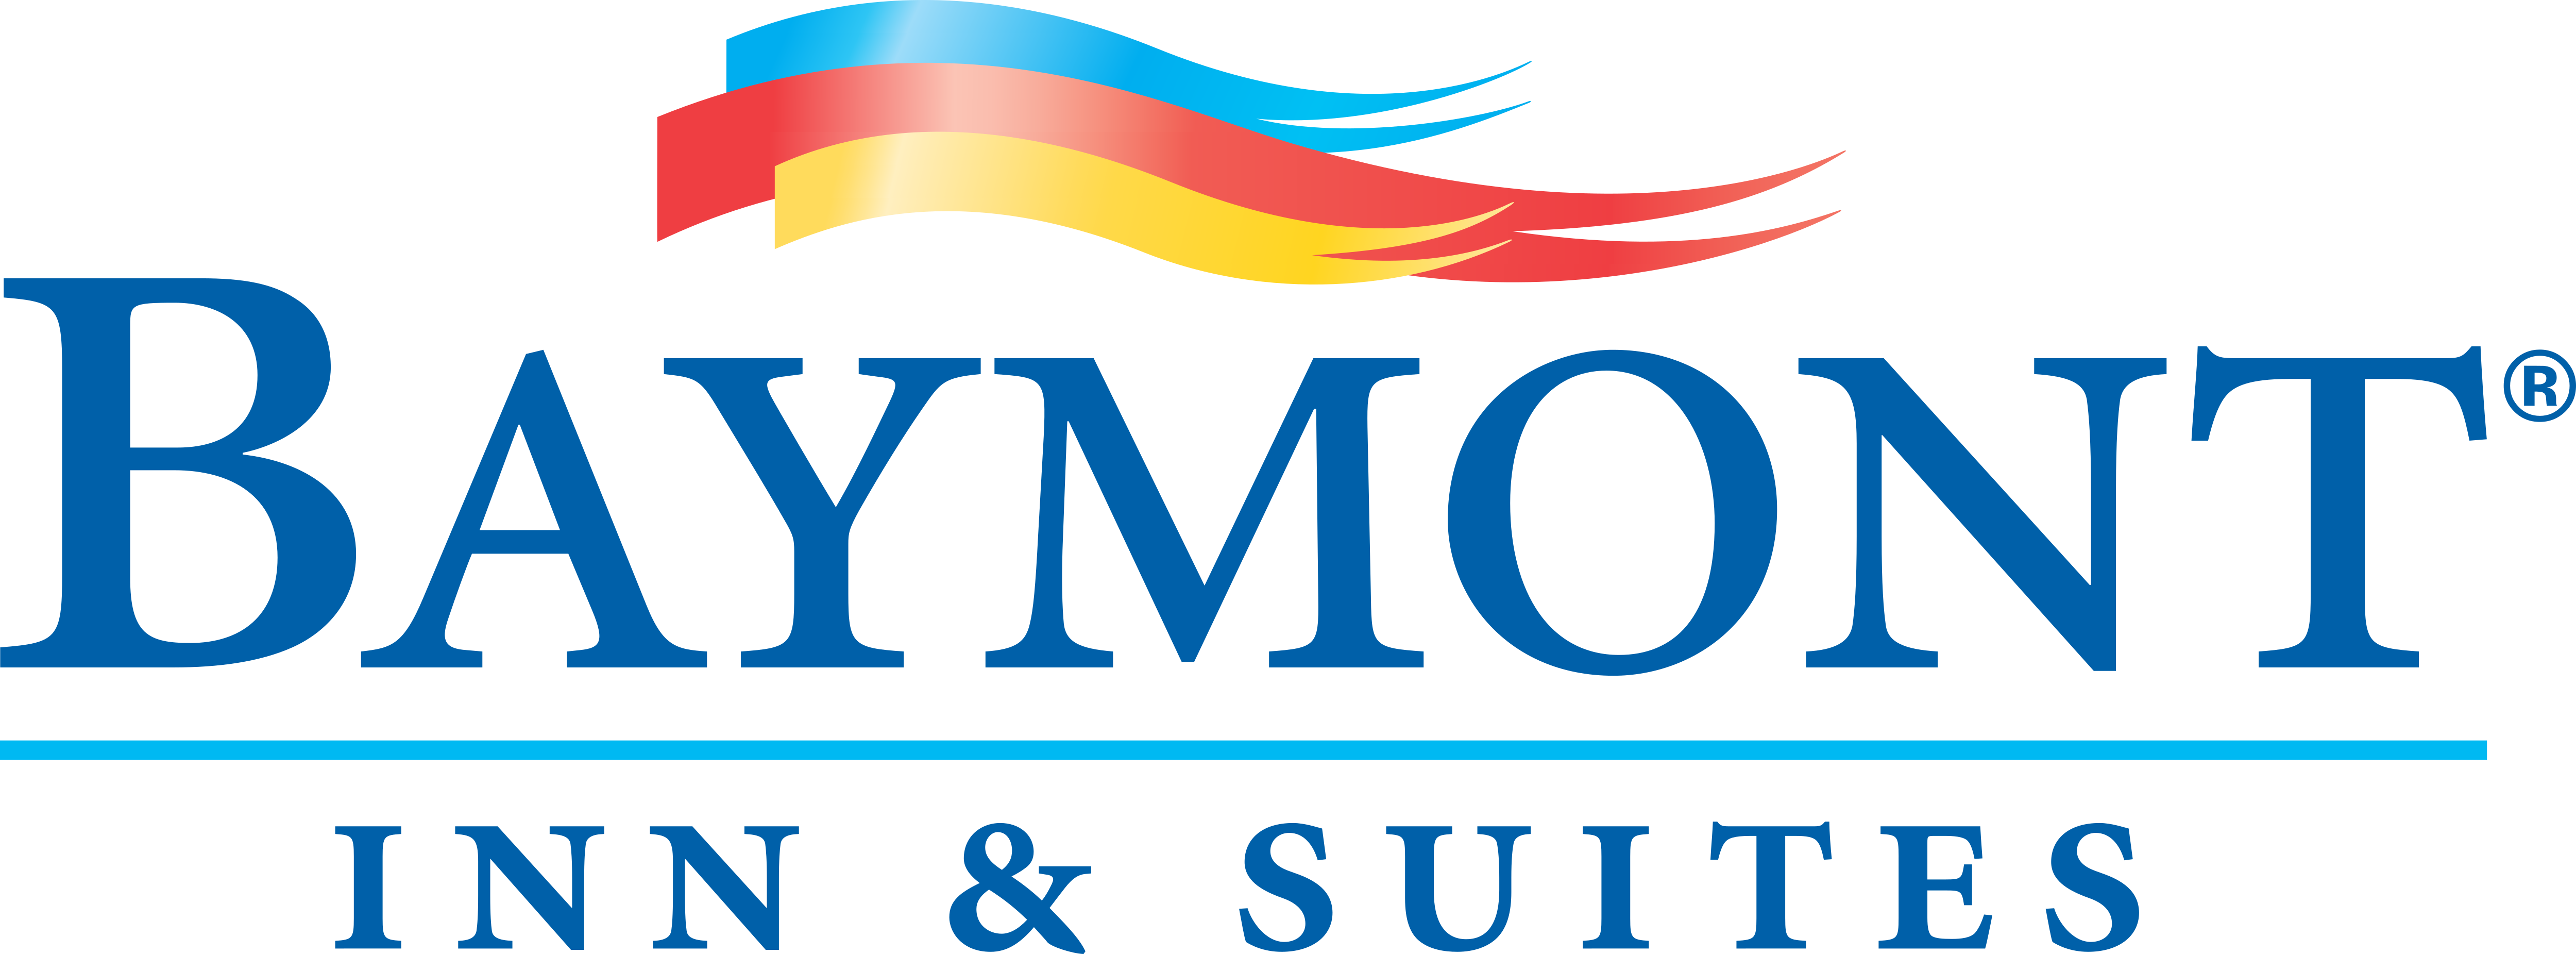 Baymont_Inn_and_Suites_Logo